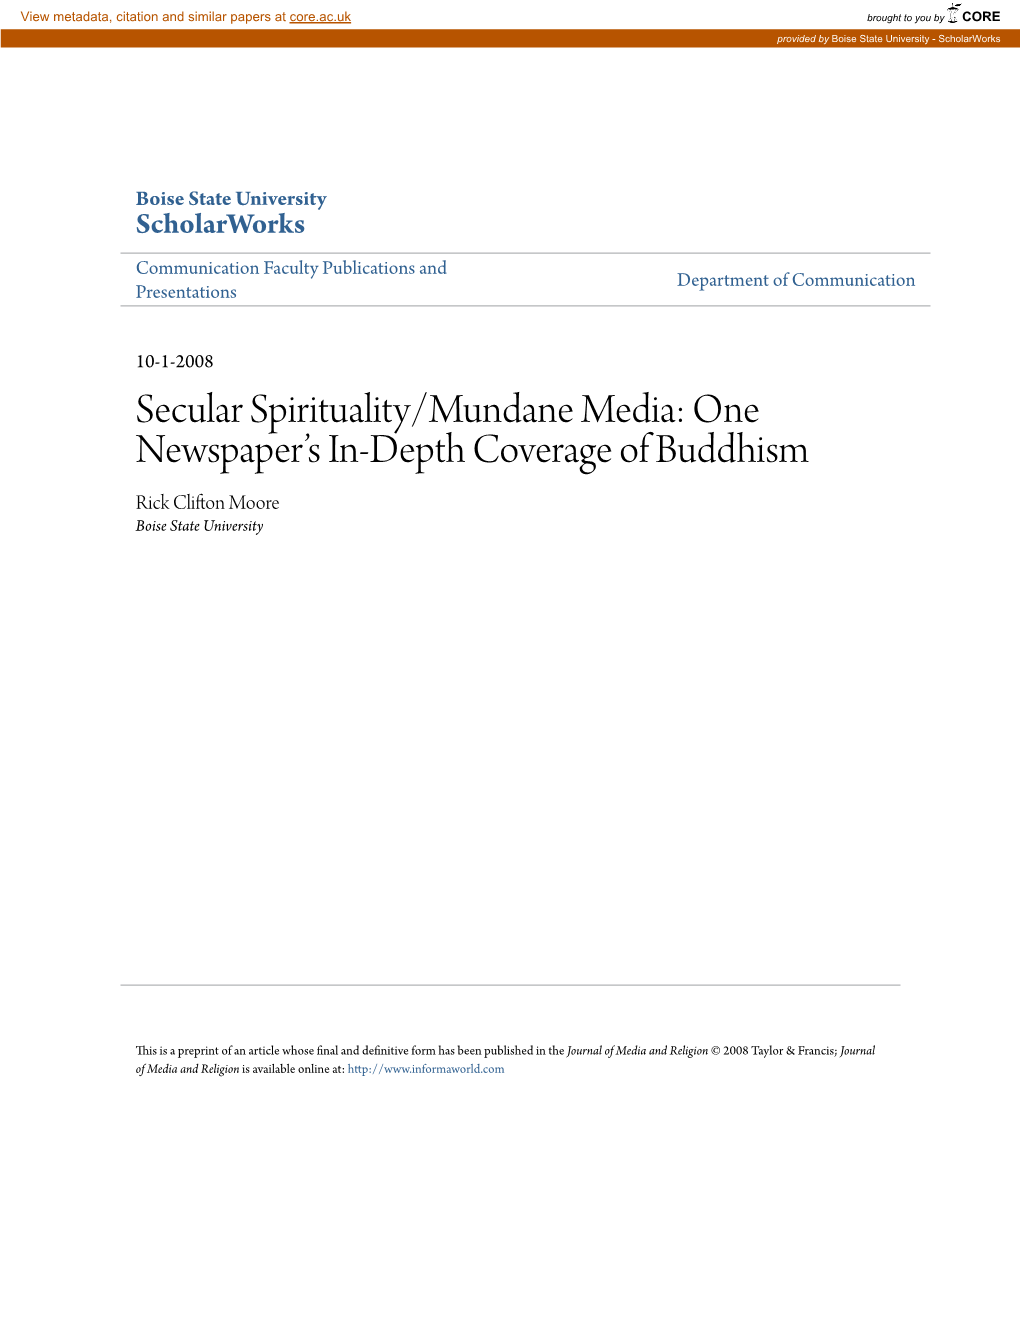 Secular Spirituality/Mundane Media: One Newspaper’S In-Depth Coverage of Buddhism Rick Clifton Moore Boise State University